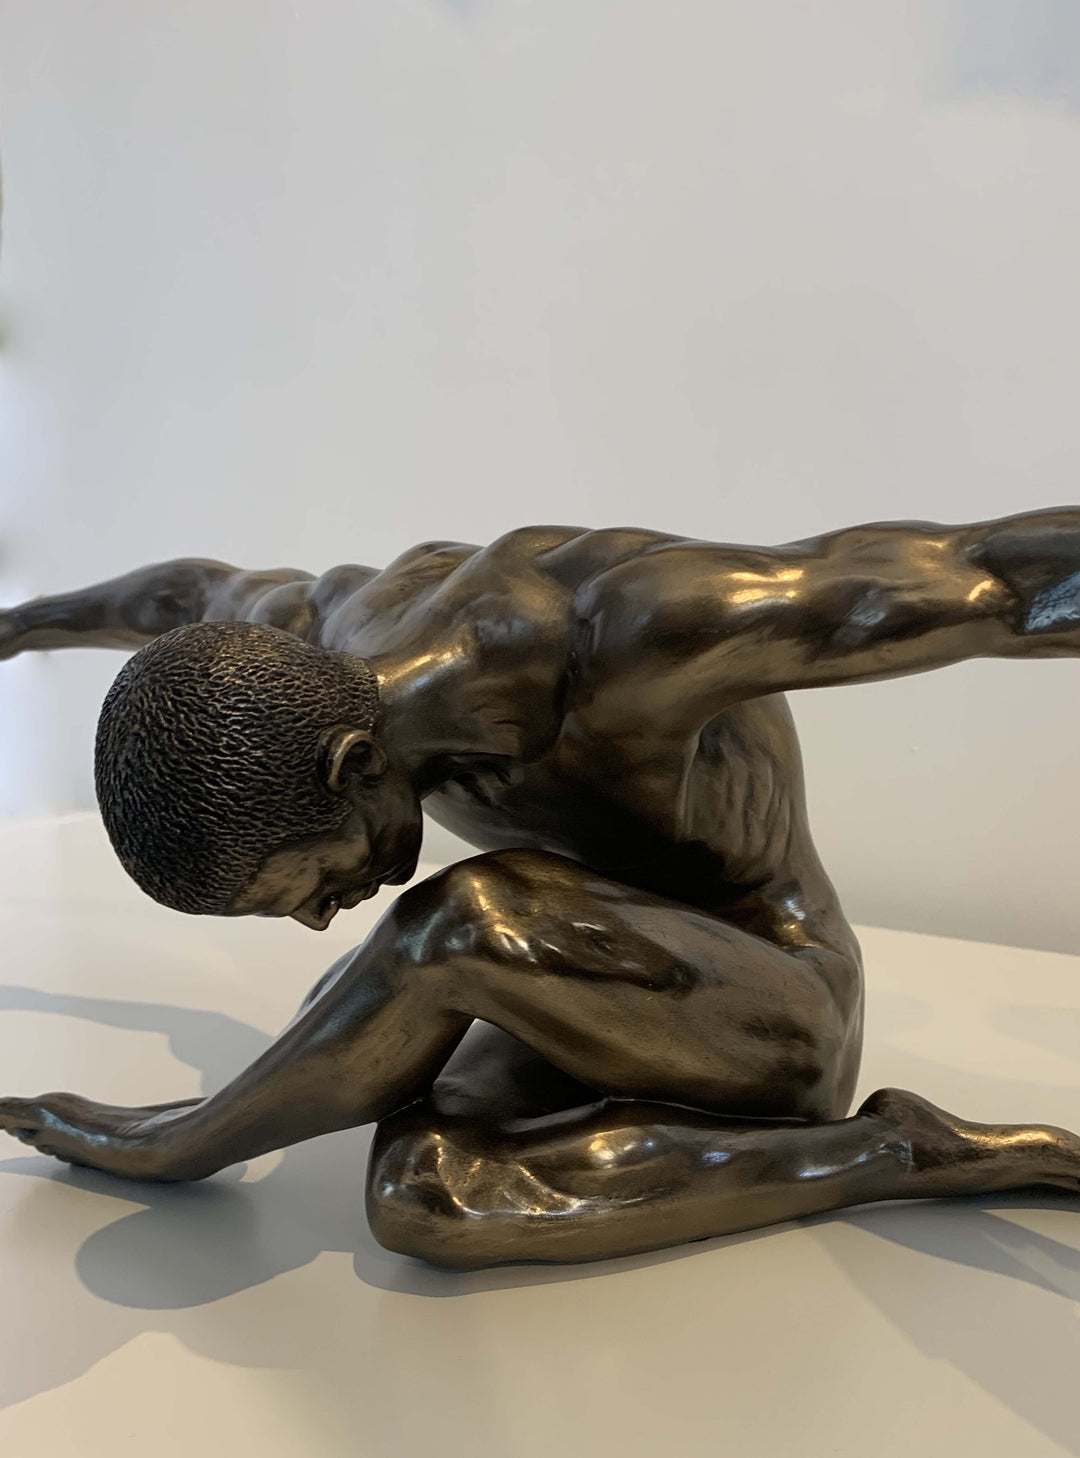 Libra-keswick-male-nude-arms-outstretched-oversized-sculpture-nude-female-figurine-crouching-nude-bronze-sculpture